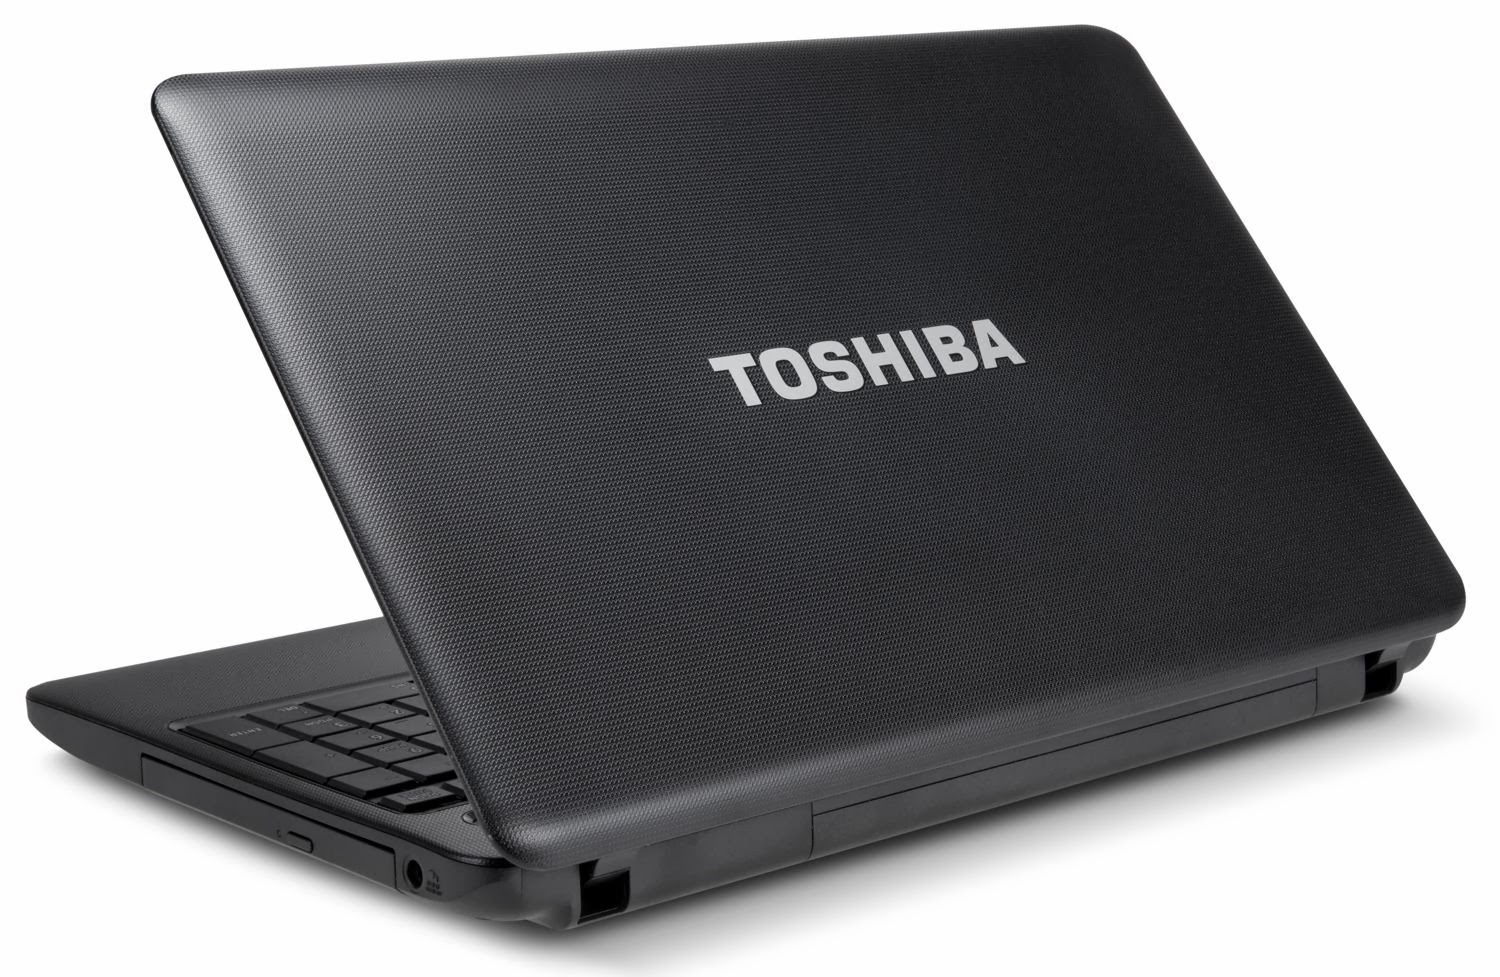 Toshiba Synaptics Touchpad Driver Windows 10